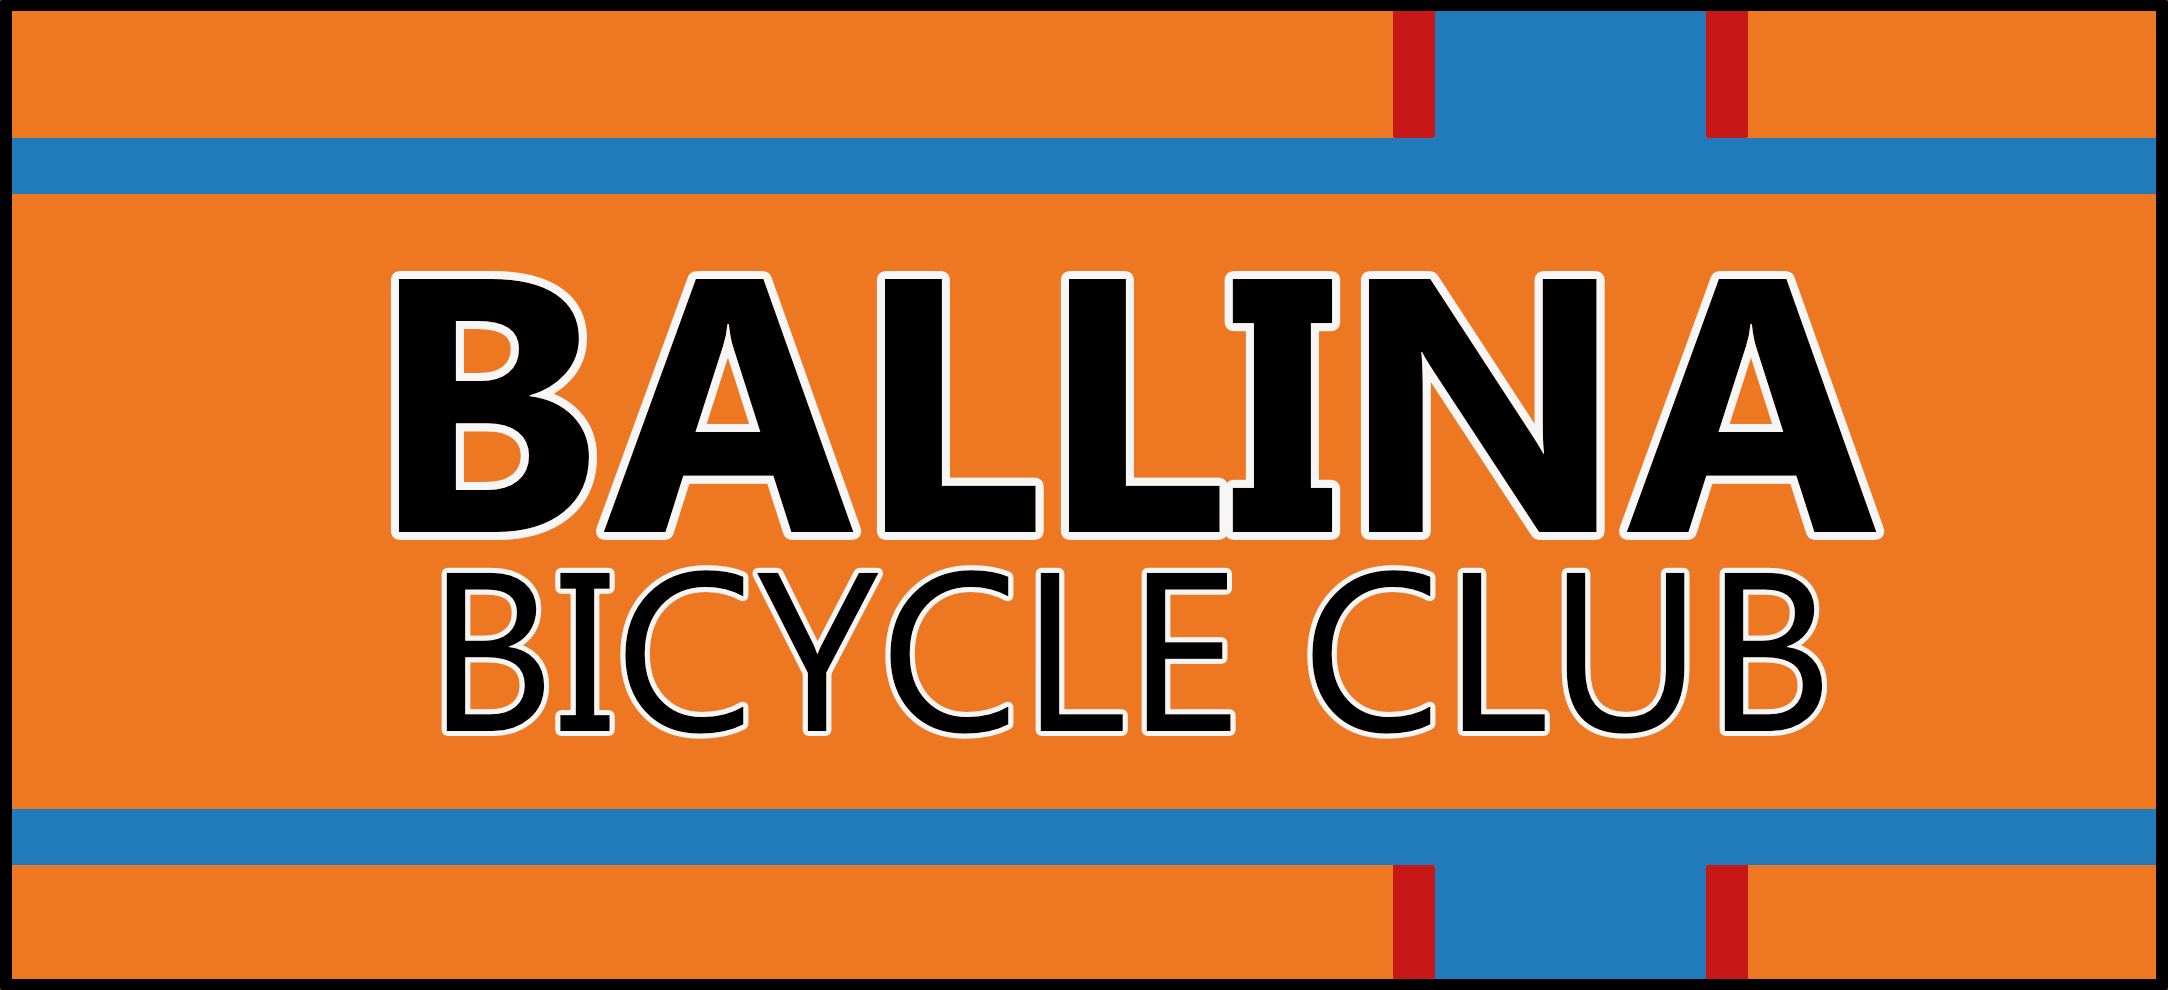 Ballina Bicycle Club